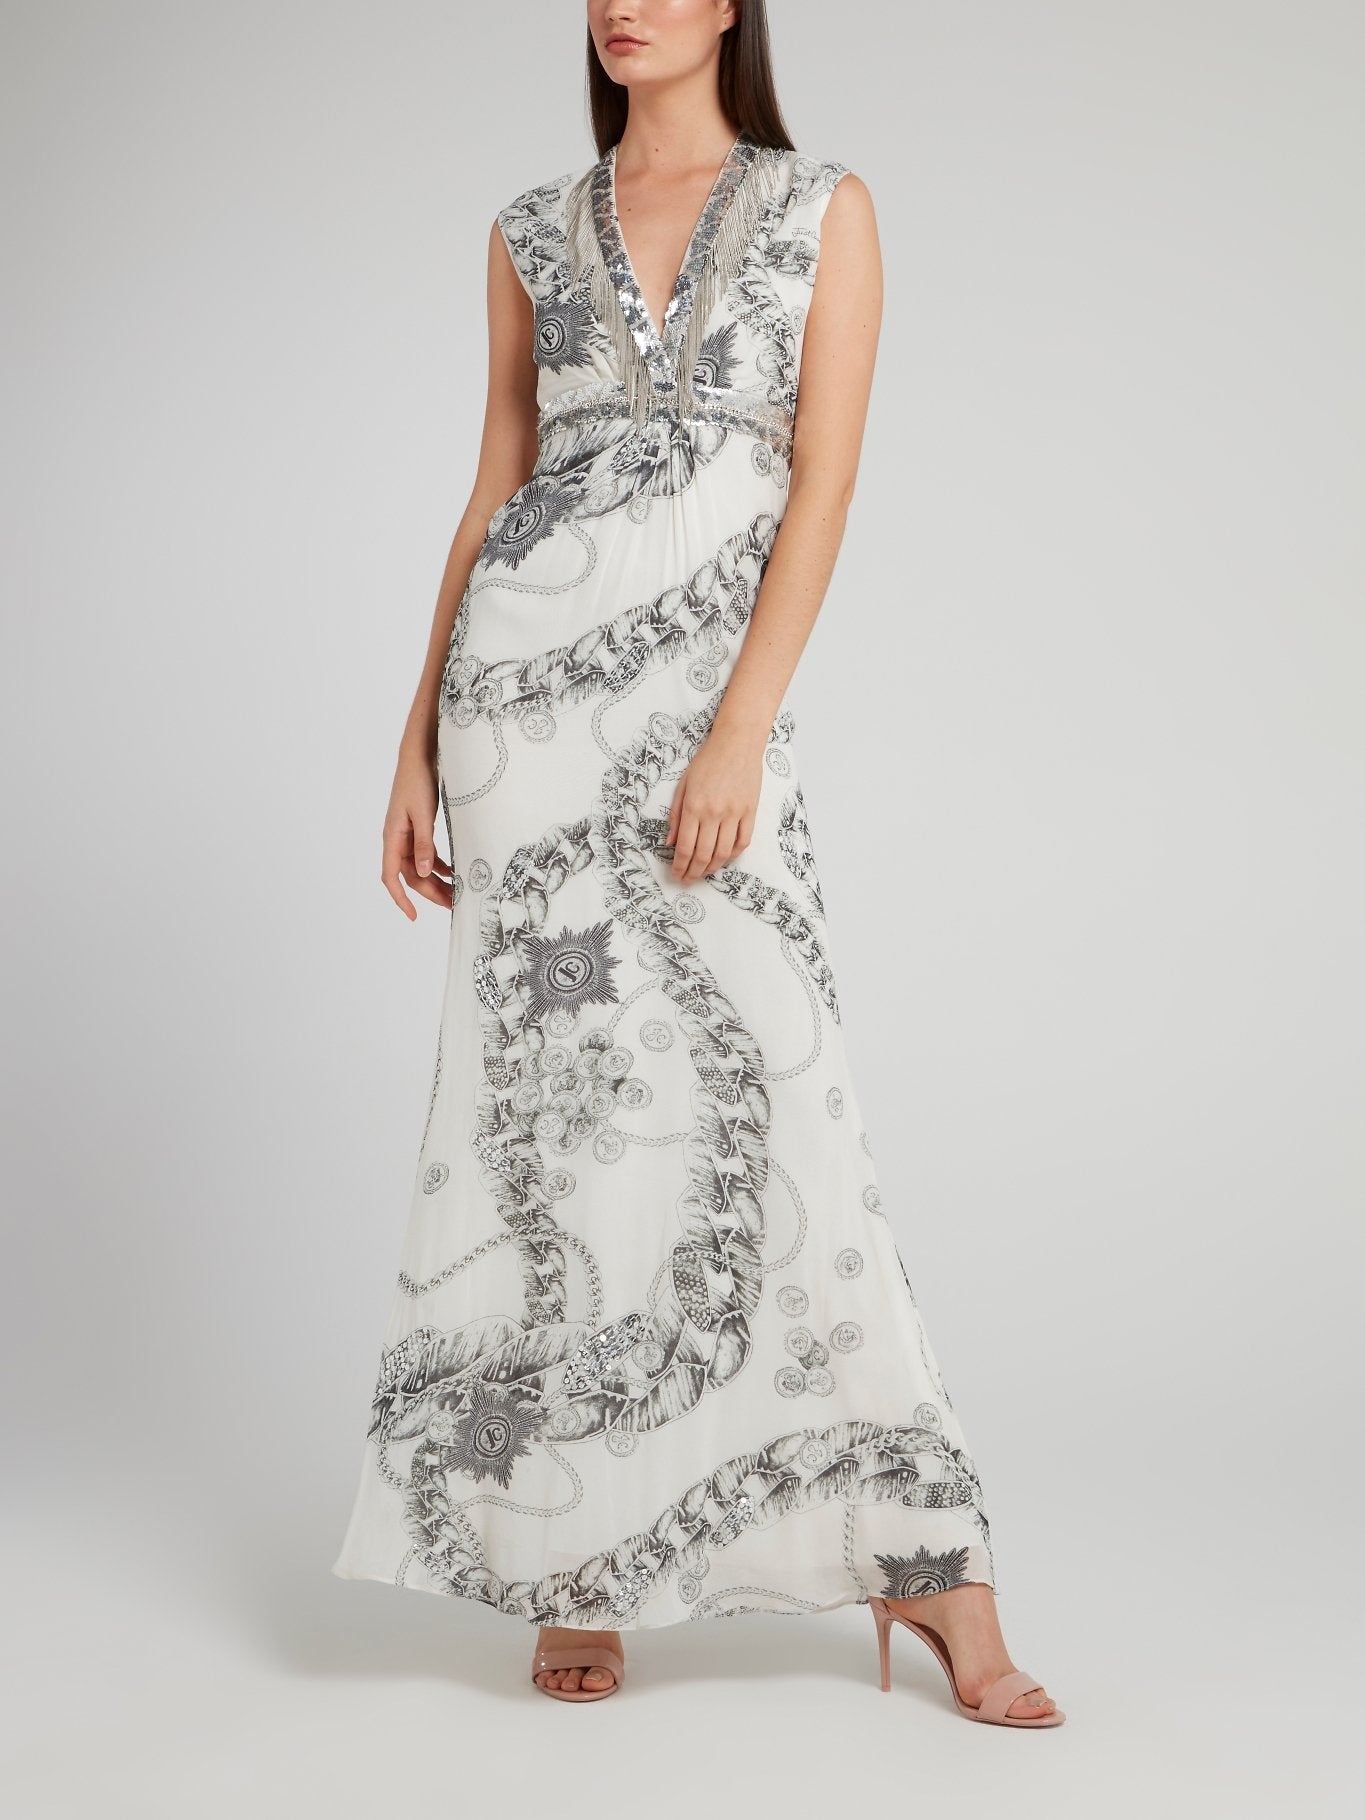 White Sequin Empire Waist Dress